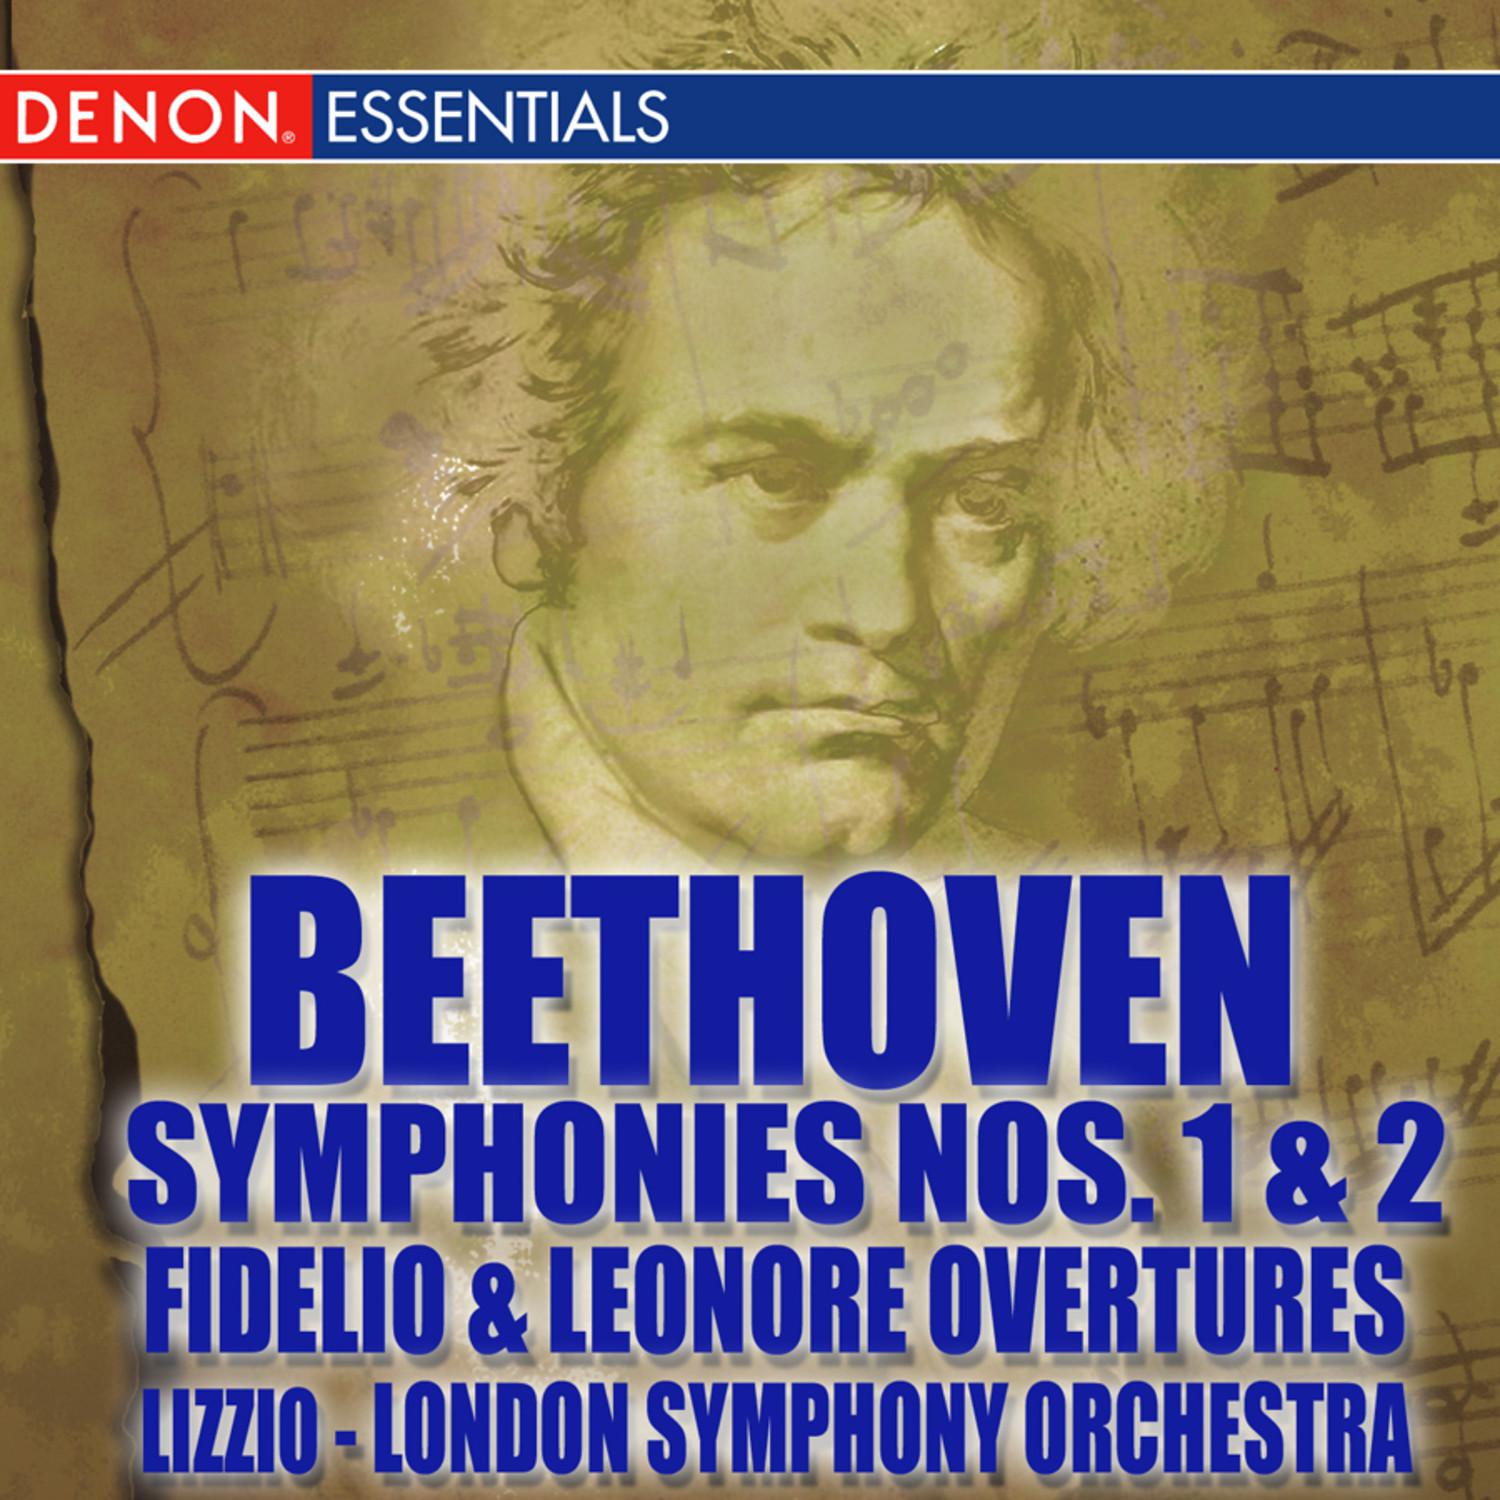 Beethoven Symphonies Nos. 1 & 2